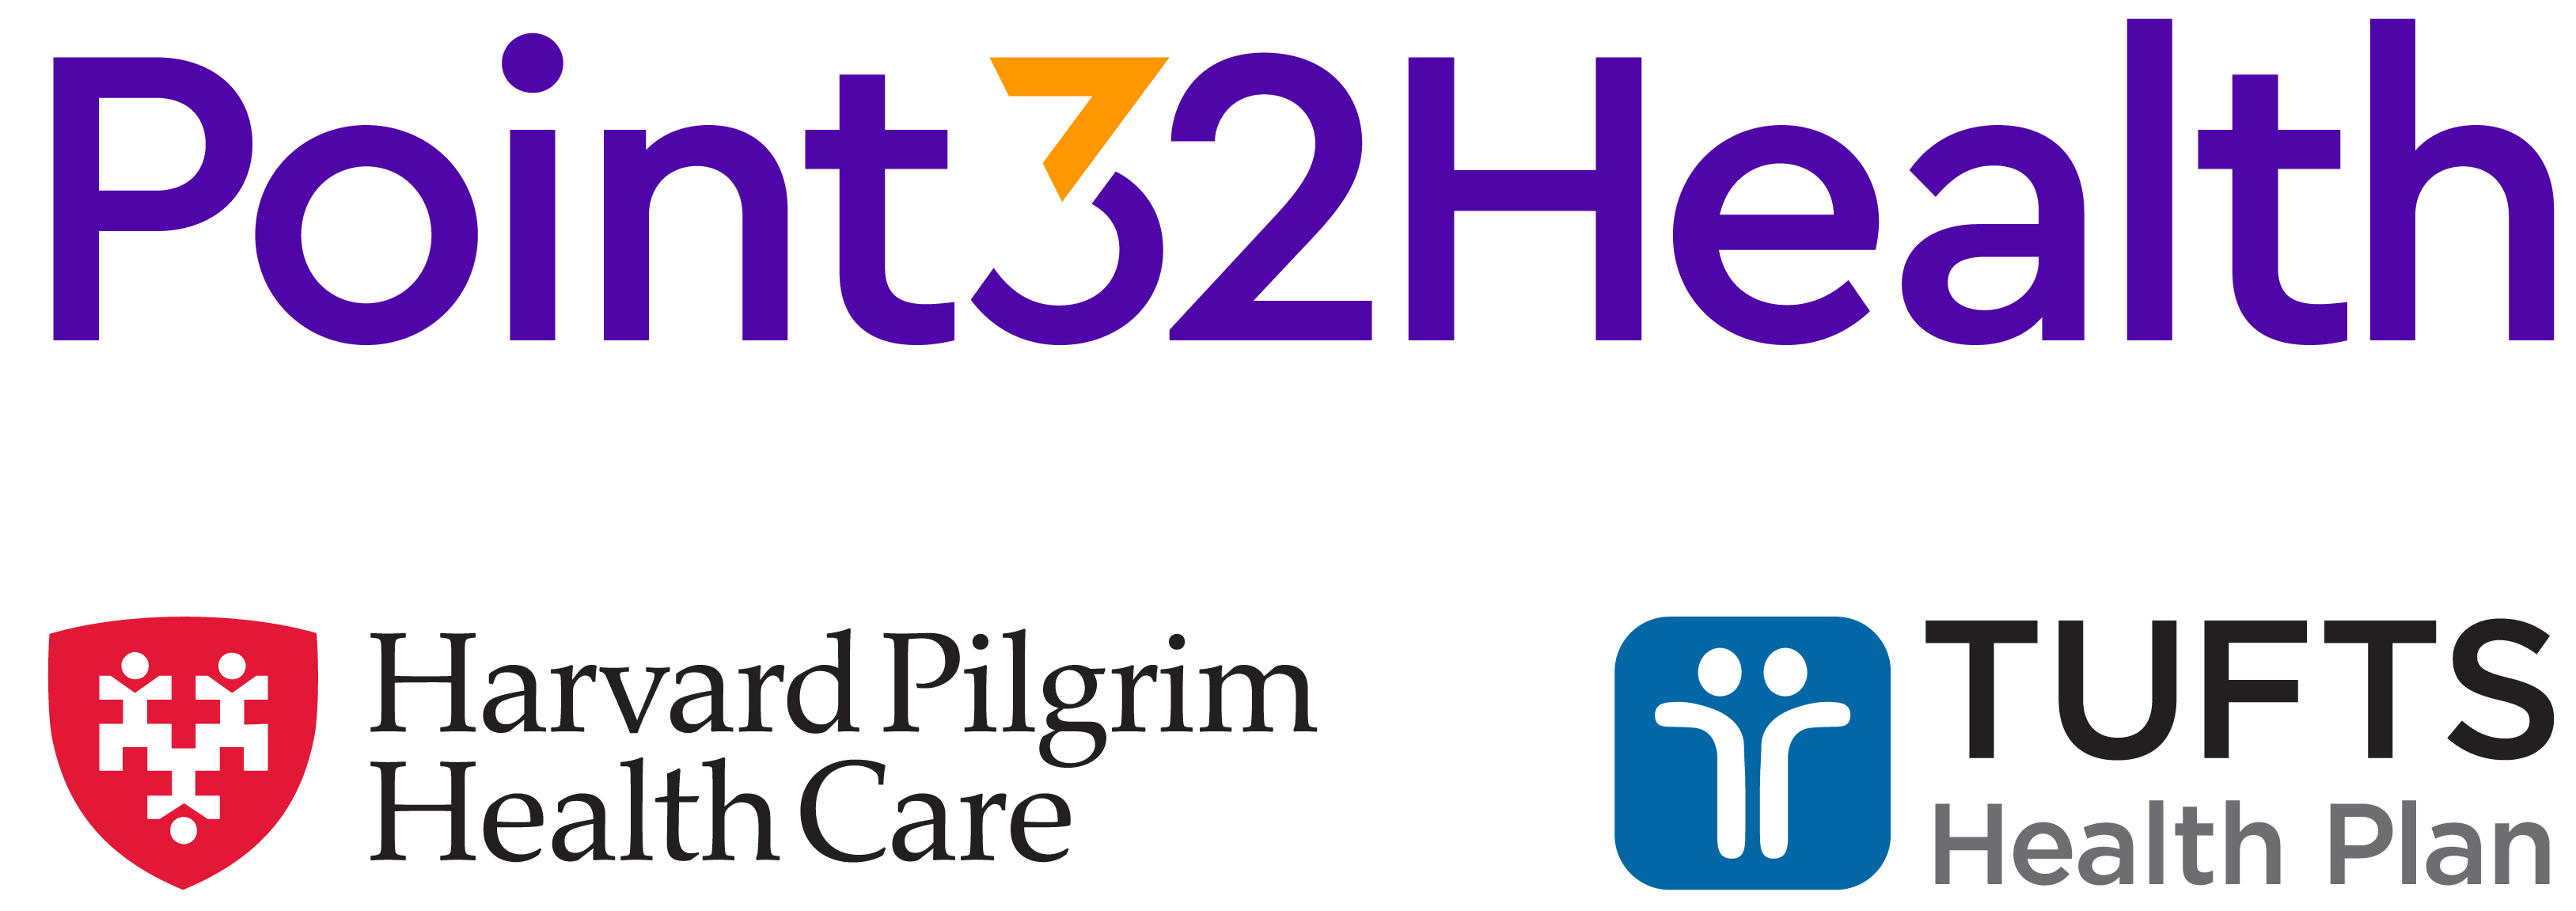 Point32Health, Harvard Pilgrim Health Care and Tufts Health Plan